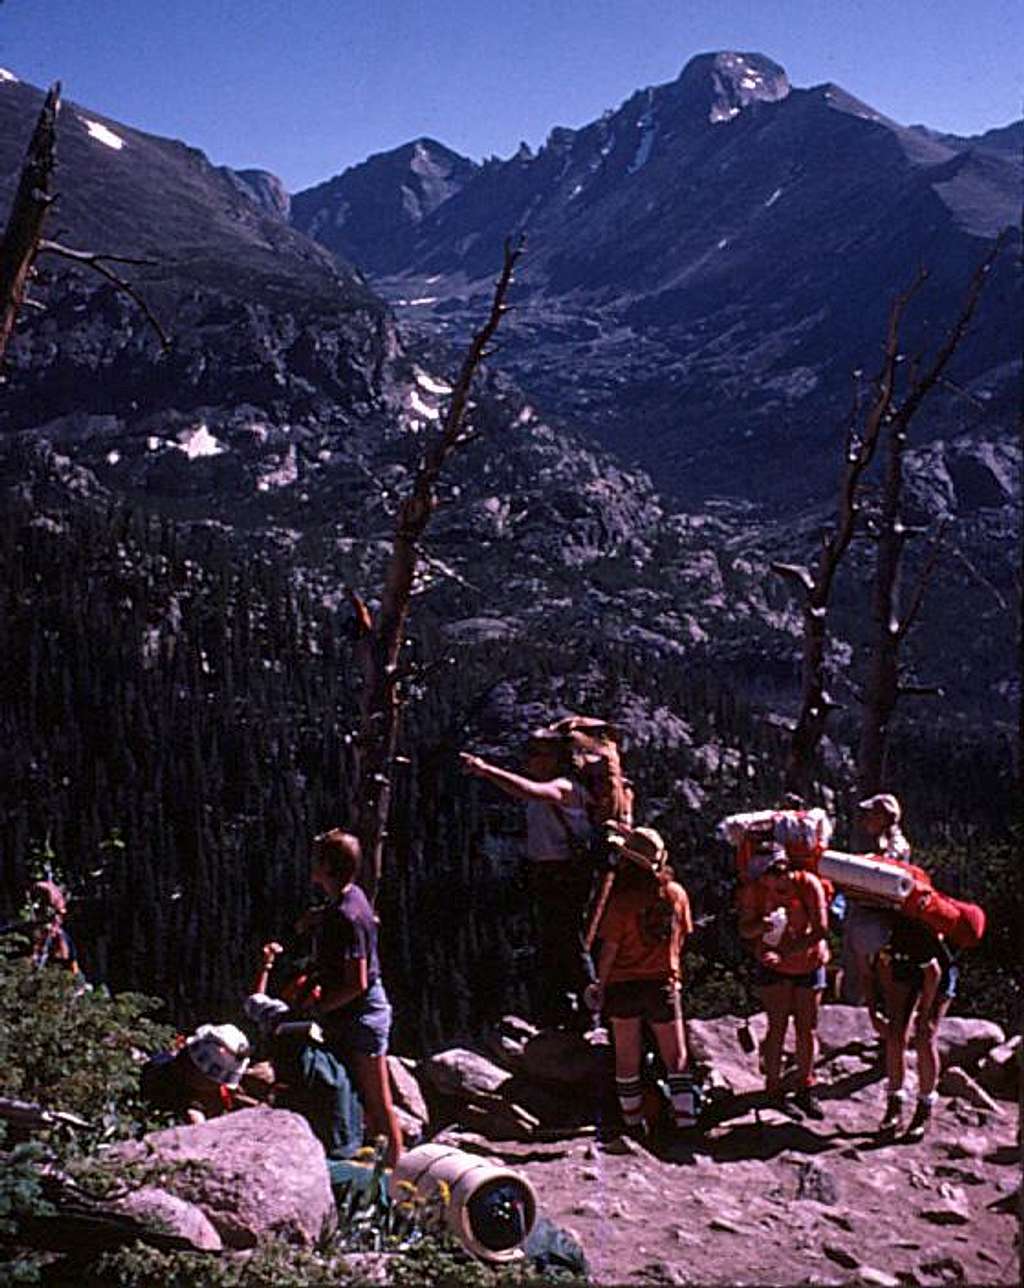 Rocky Mtn High 1975 - Hiking up Flattop Trail